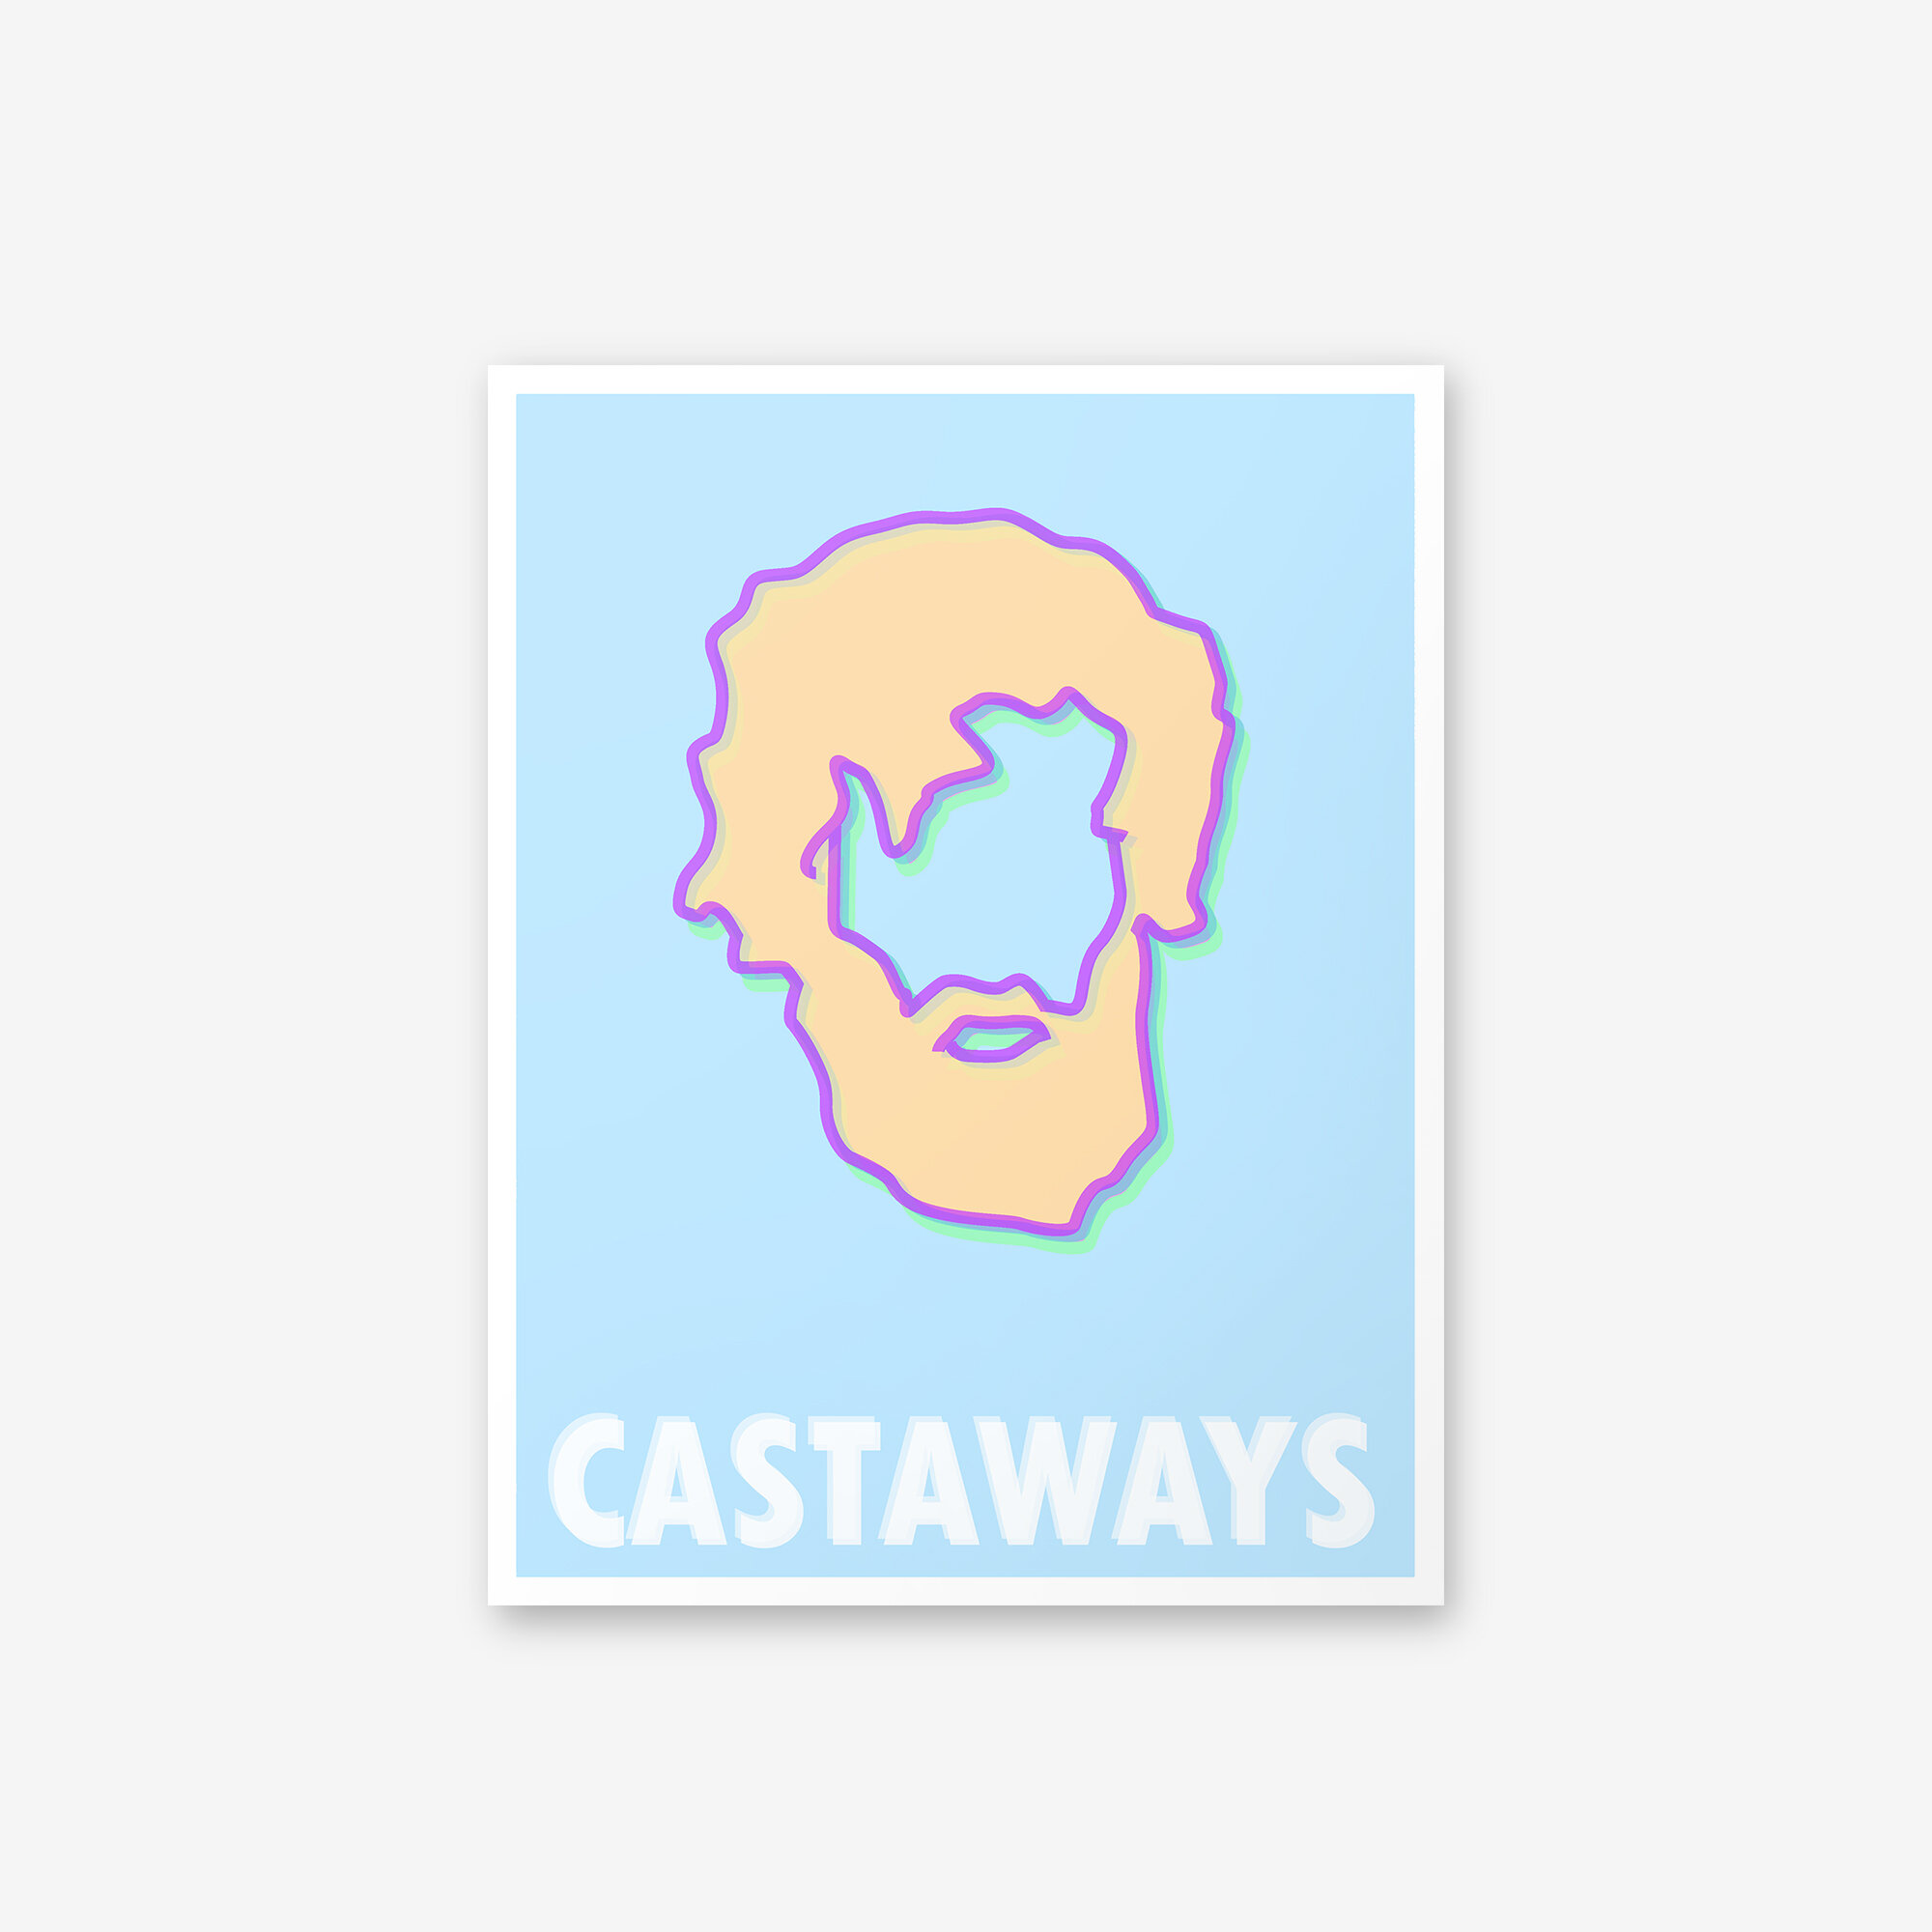 BVH_Posters_Crazy+Zone_Castaways.jpg